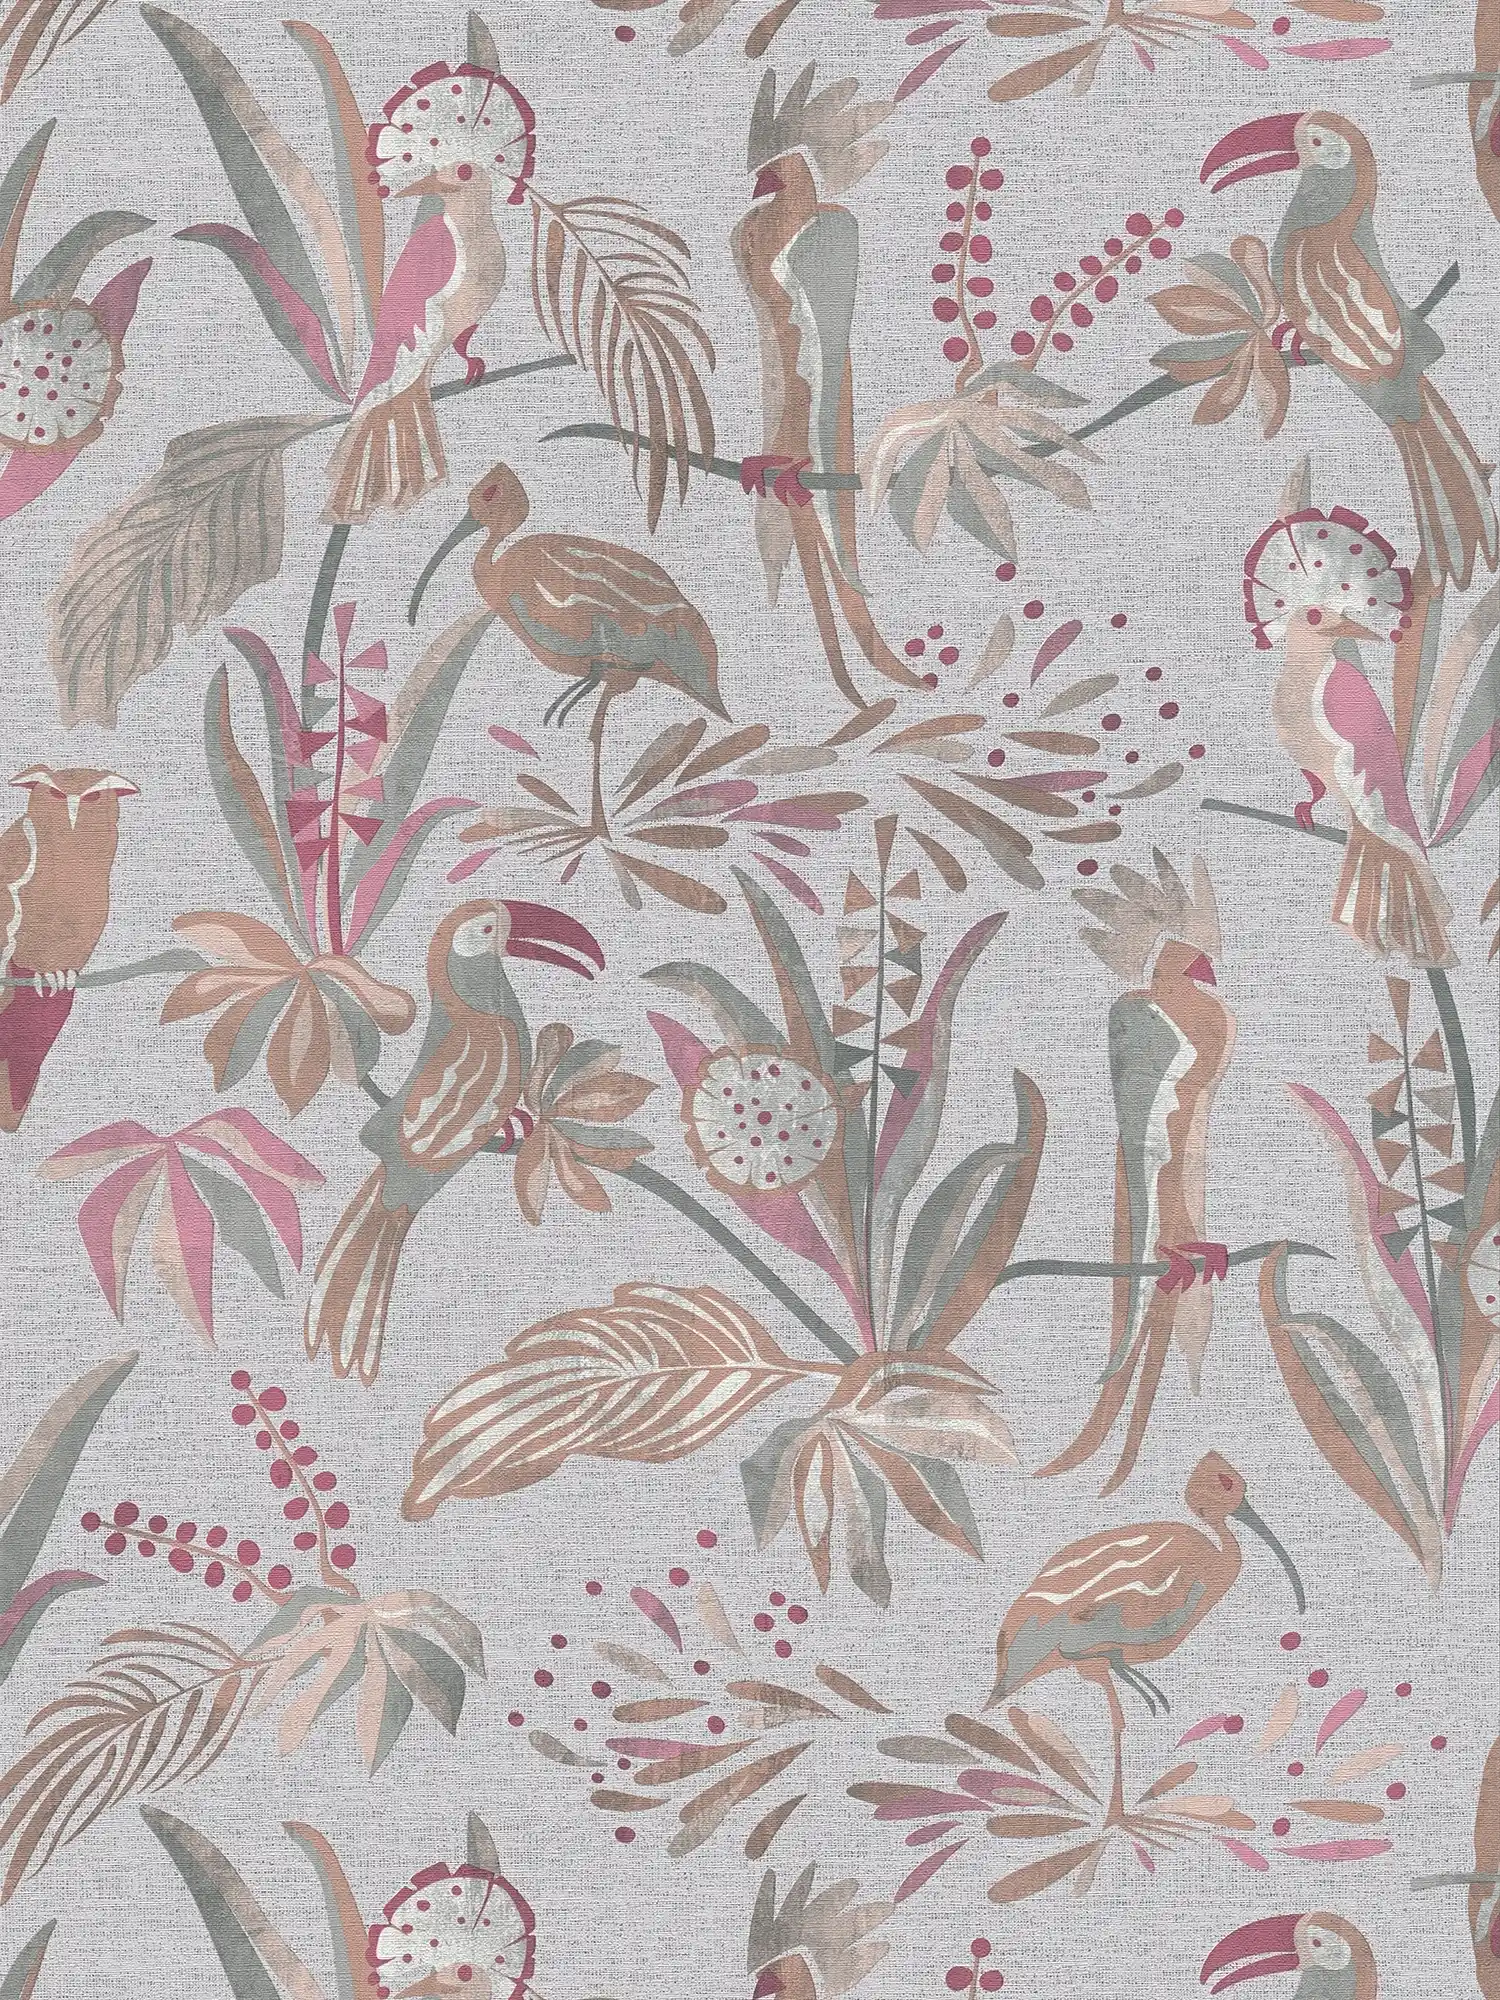 Wallpaper with tropical plants & birds in linen look - grey, brown, red
